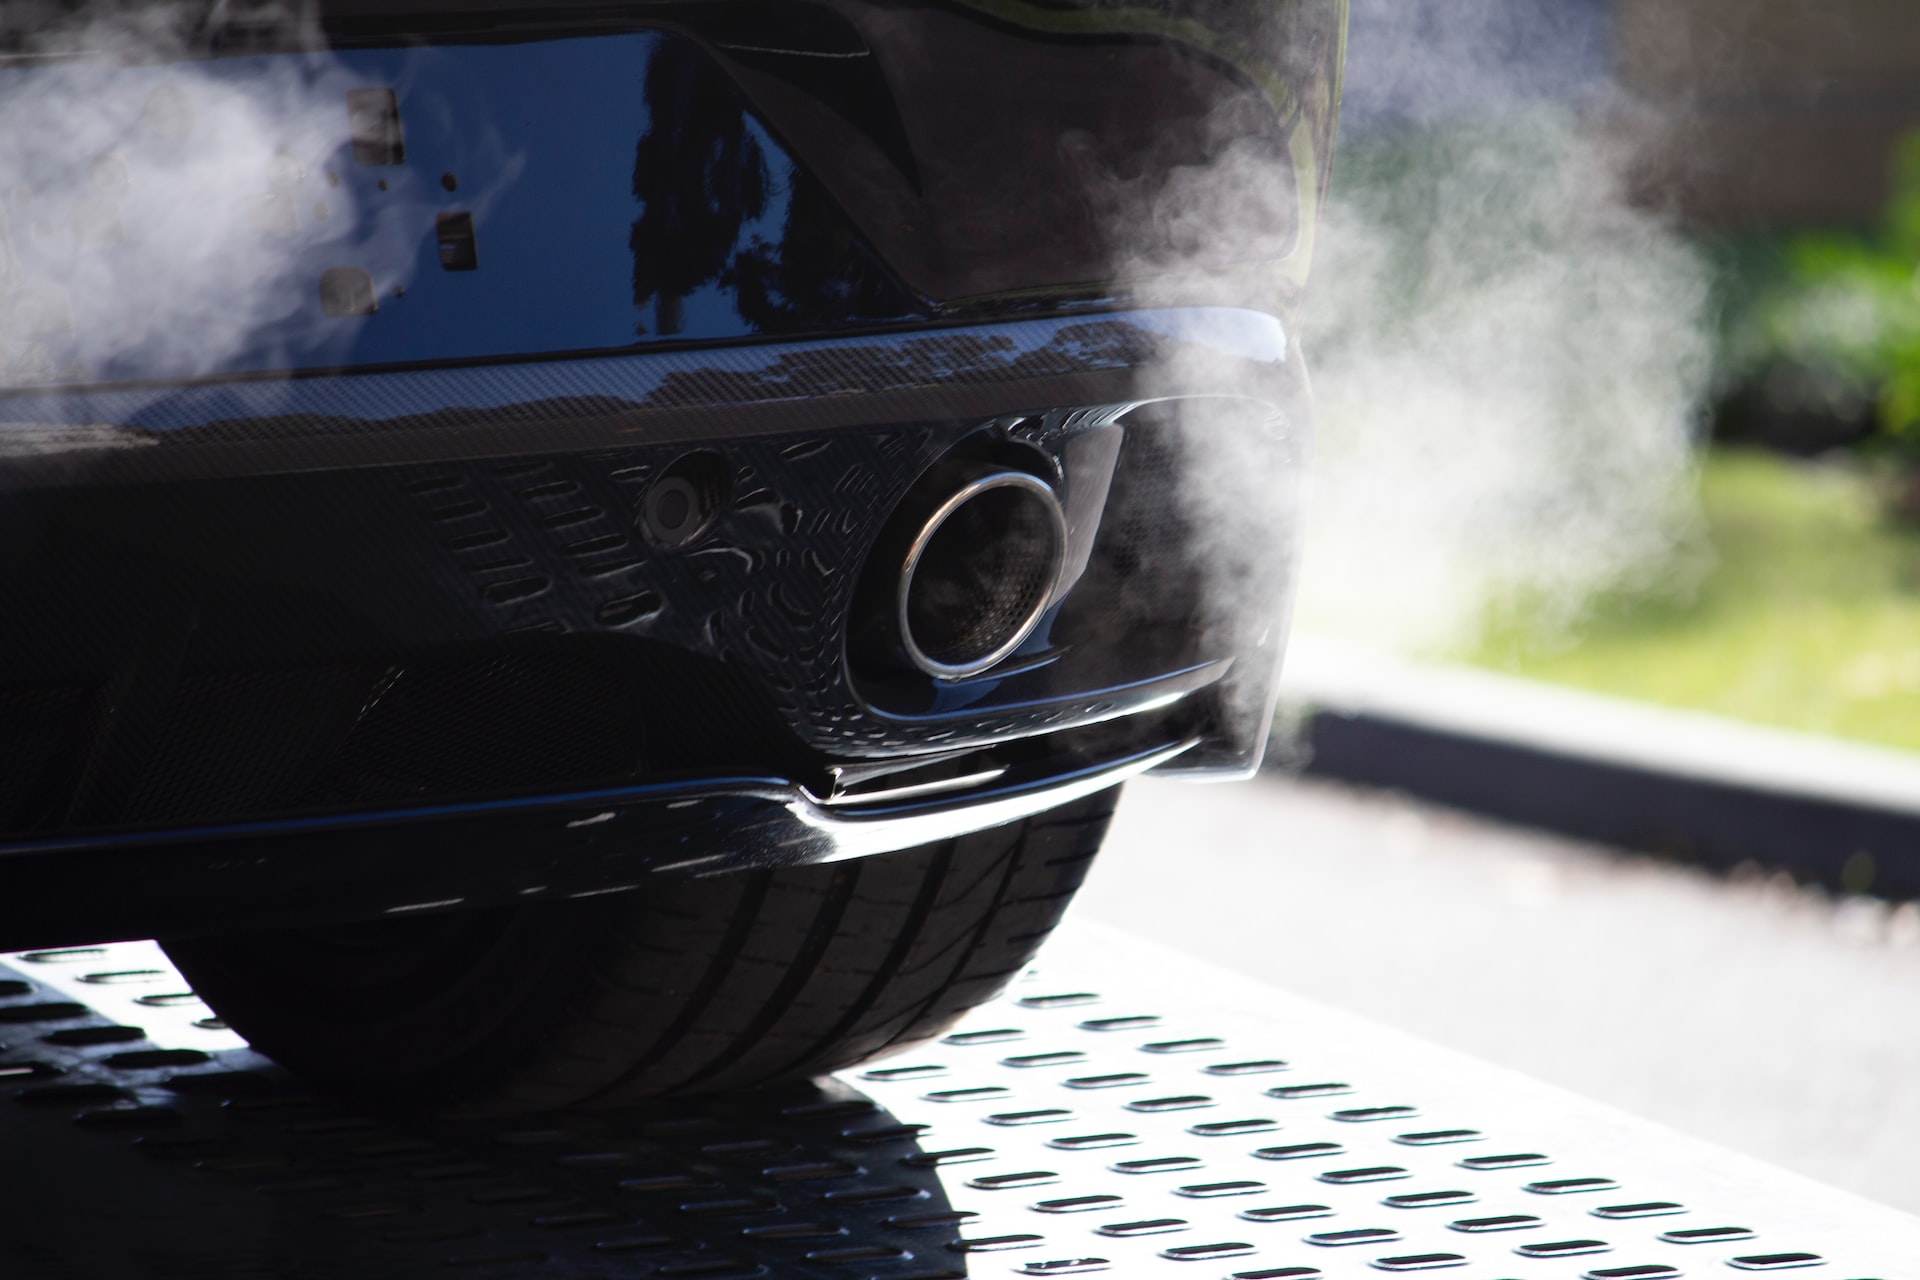 O2 (oxygen) sensor's critical role in car/automotive emissions control